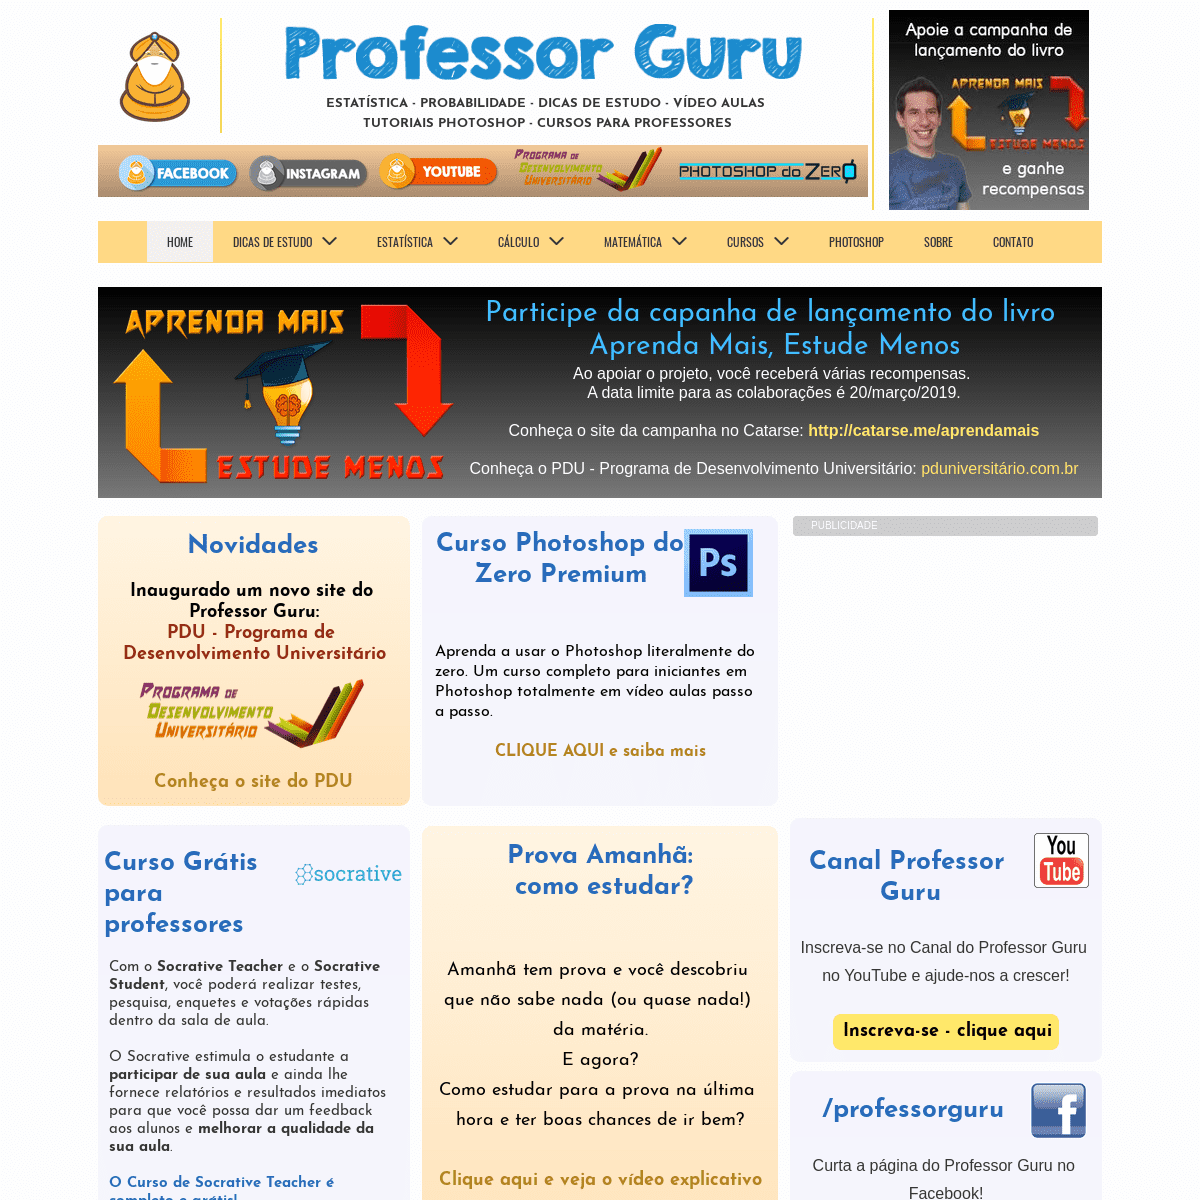 A complete backup of professorguru.com.br